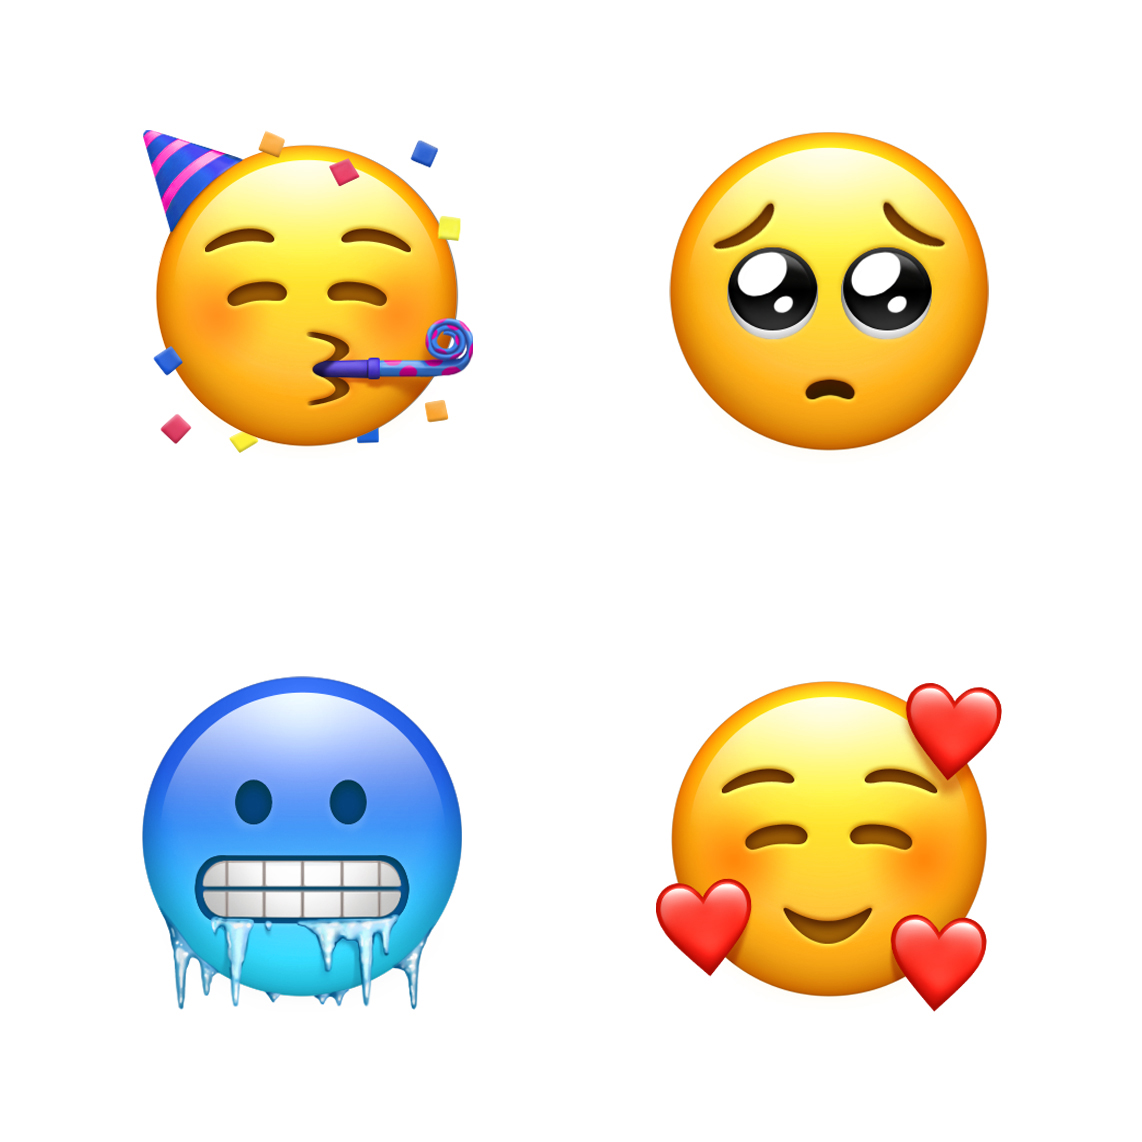 Apple Celebrates World Emoji Day, Over 70 New Emoji Coming to iOS